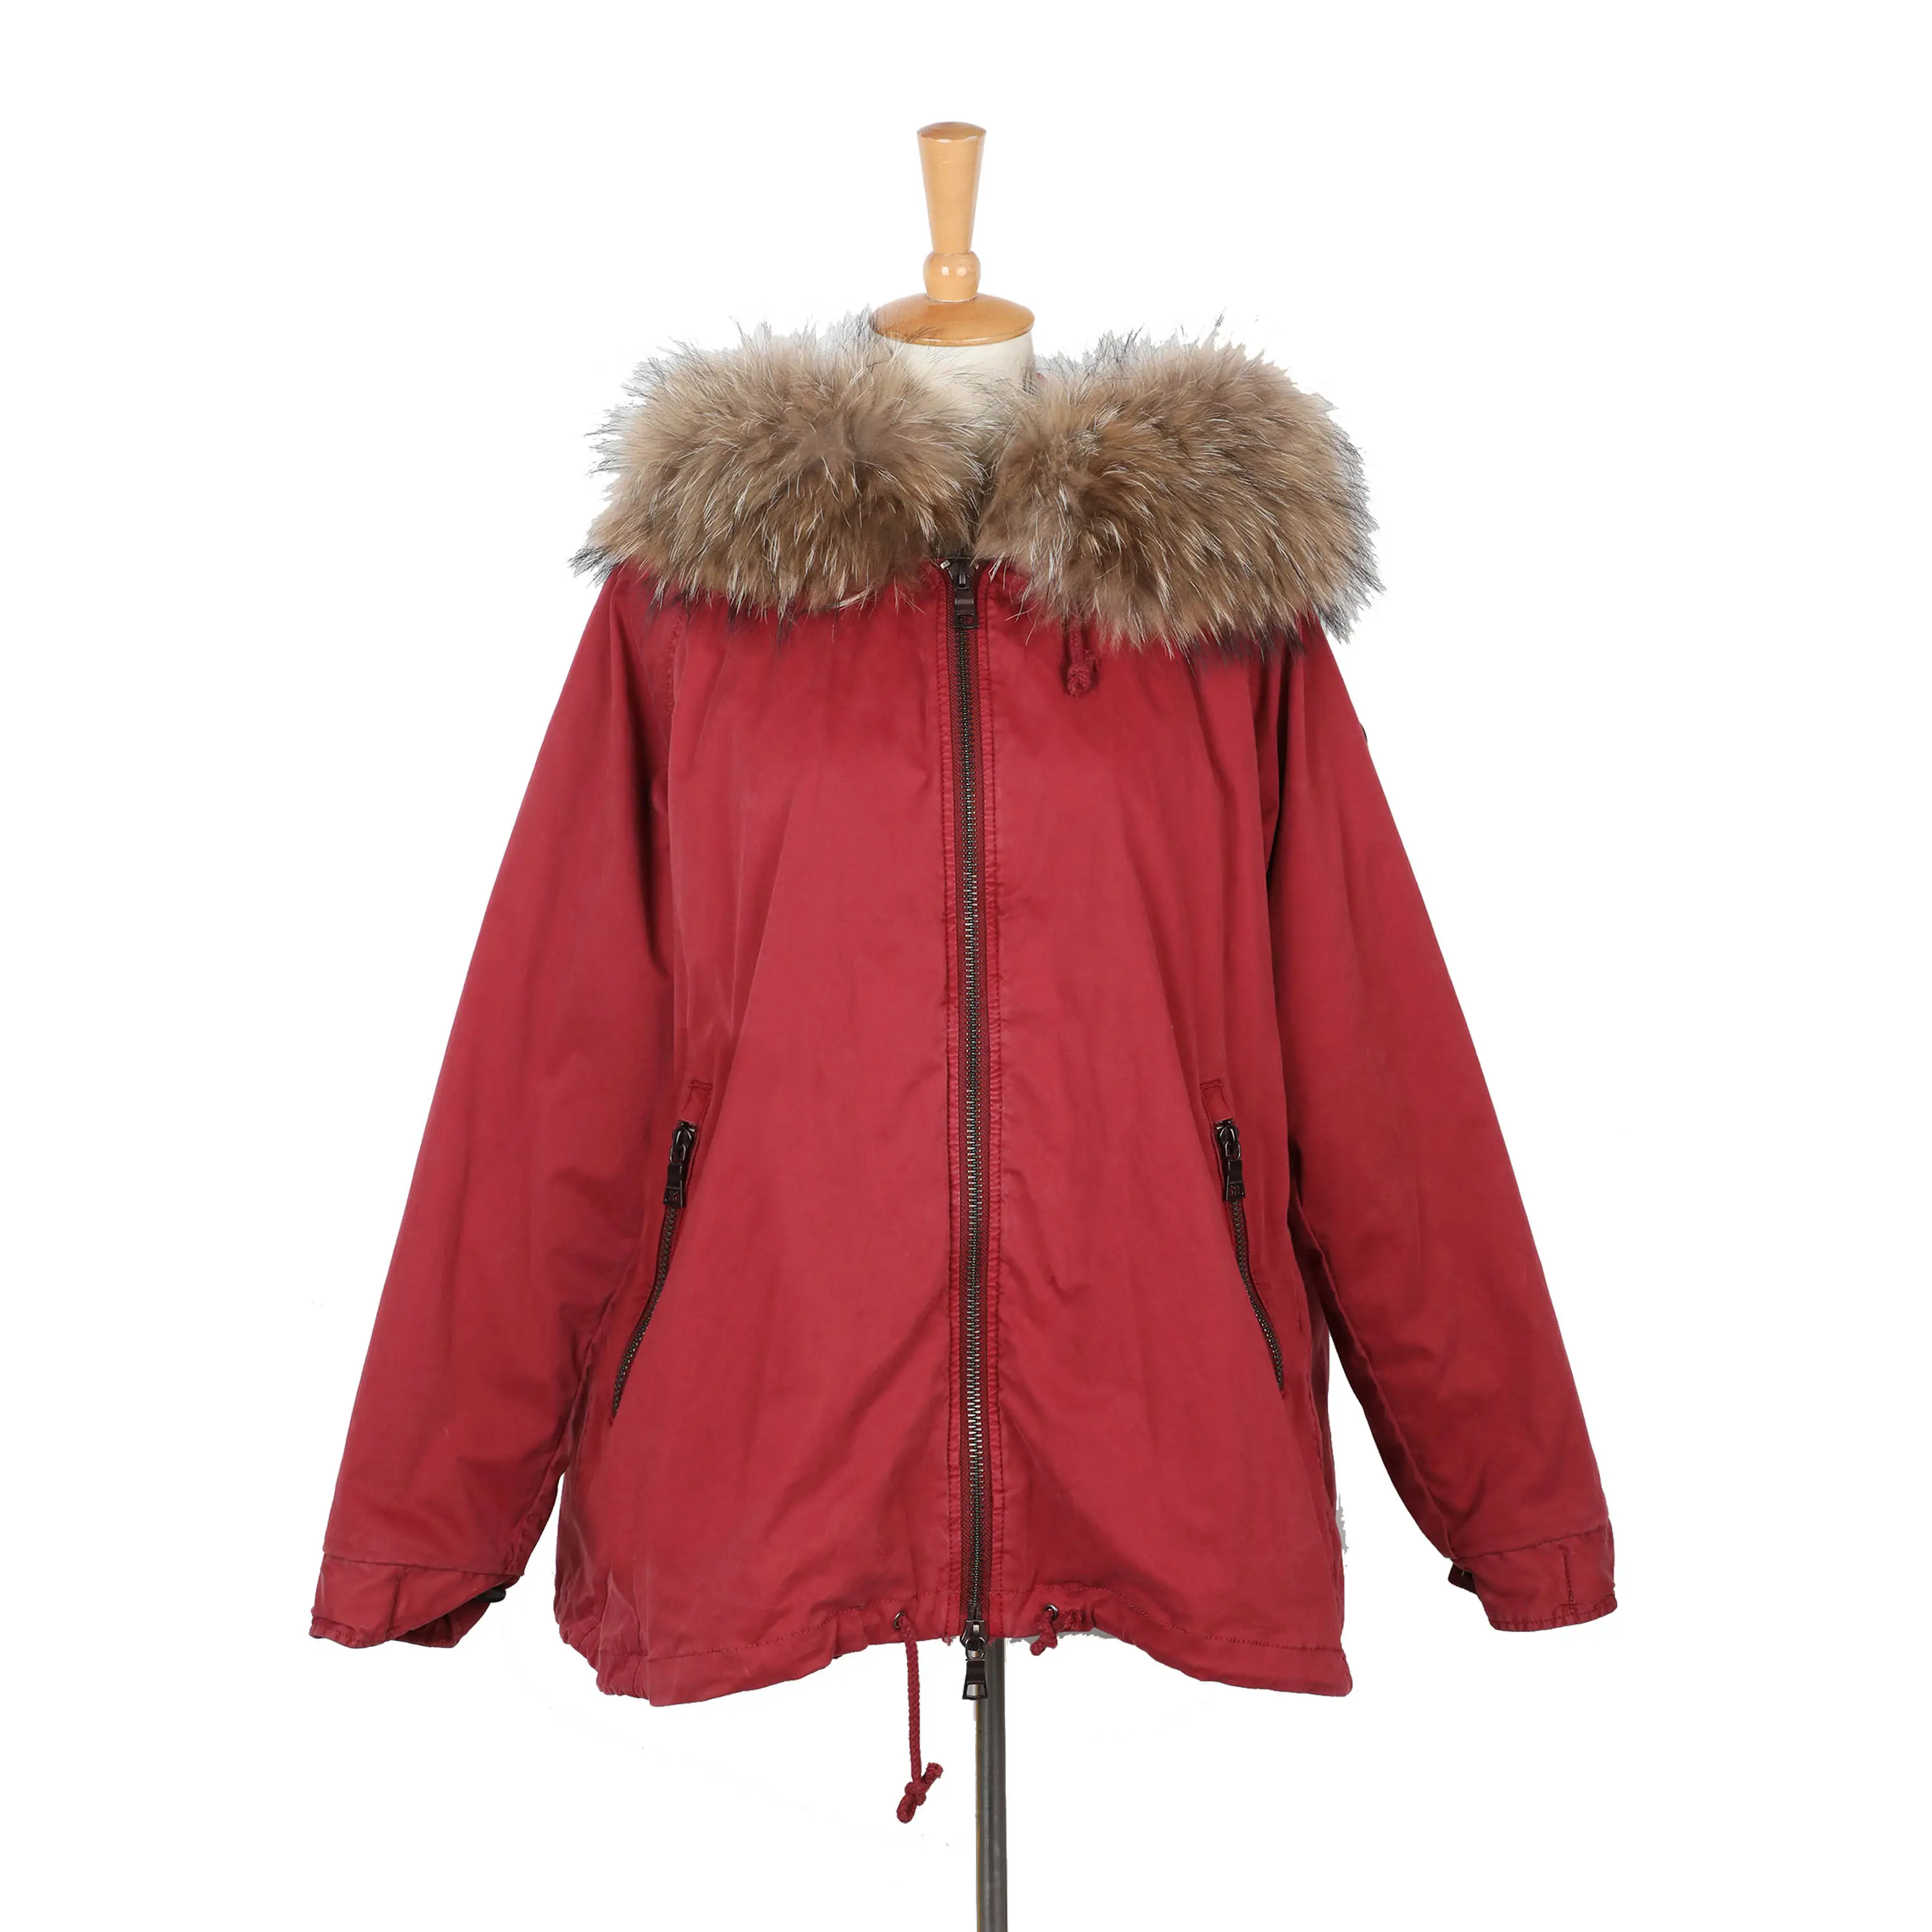 Red long fur collar duck down jacket women's hooded winter warm parka winter outdoor down jacket